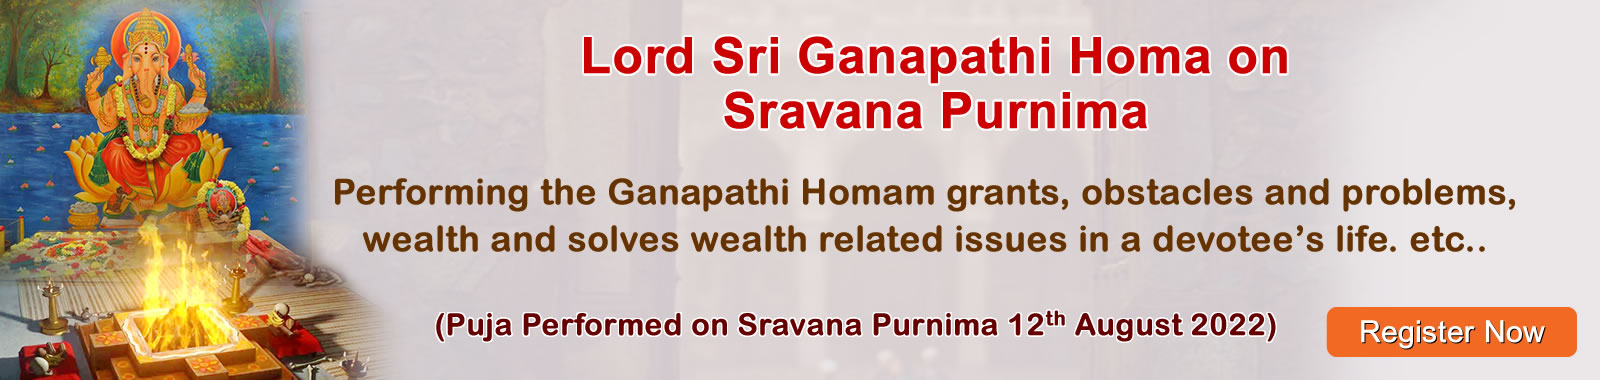 Lord Sri Ganapthi Homa